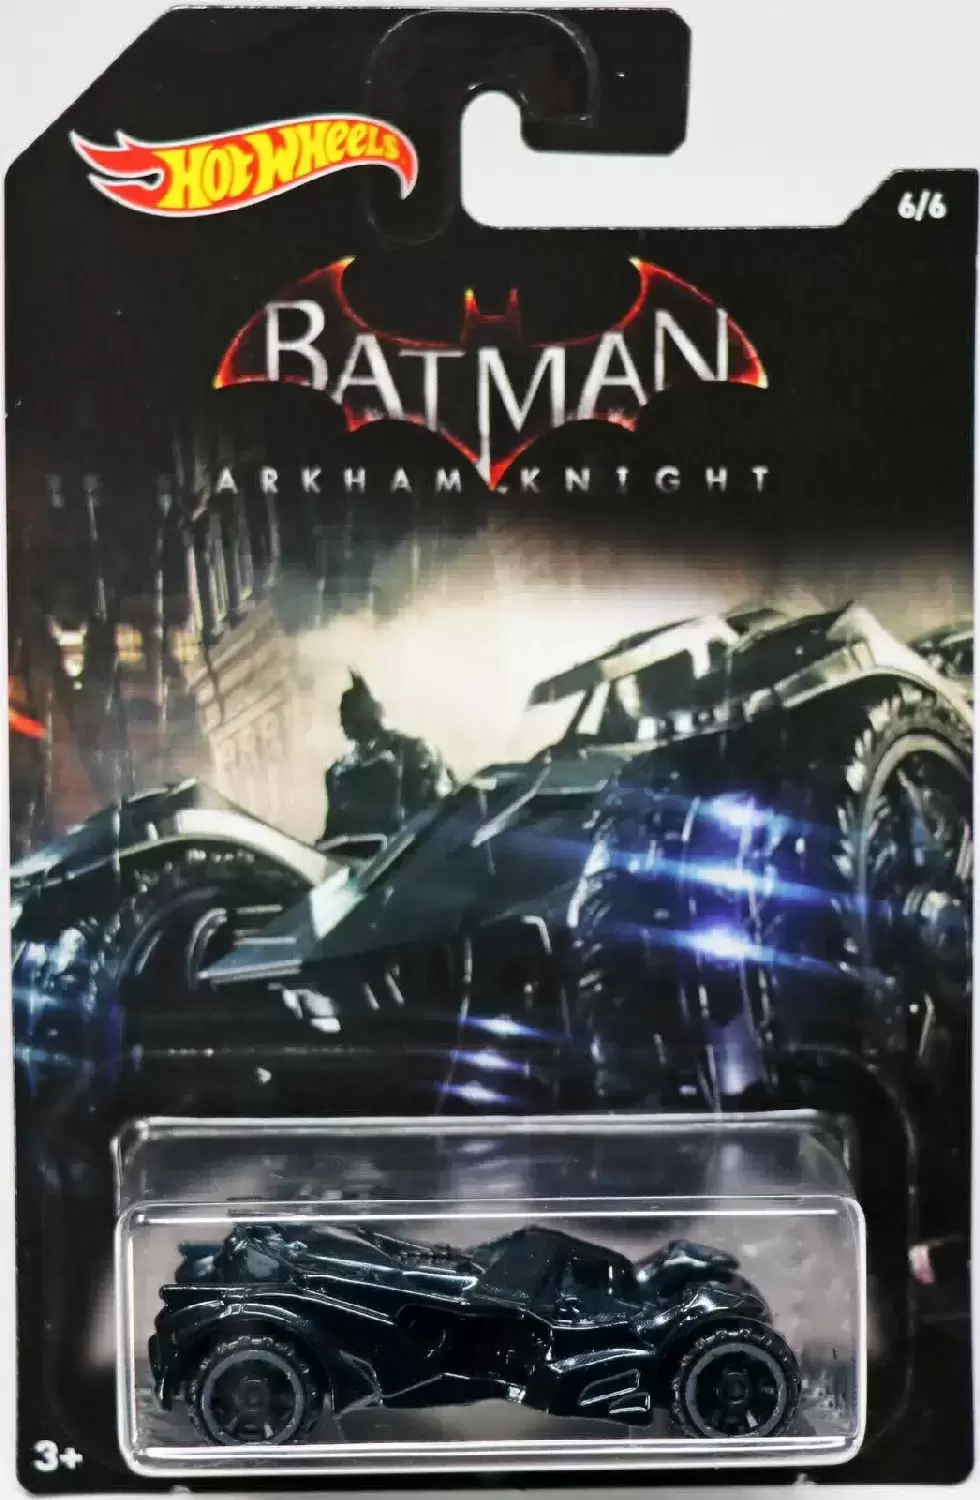 Batman Walmart Exclusive 2015 Series - Batman: Arkham Knight Batmobile (6/6)